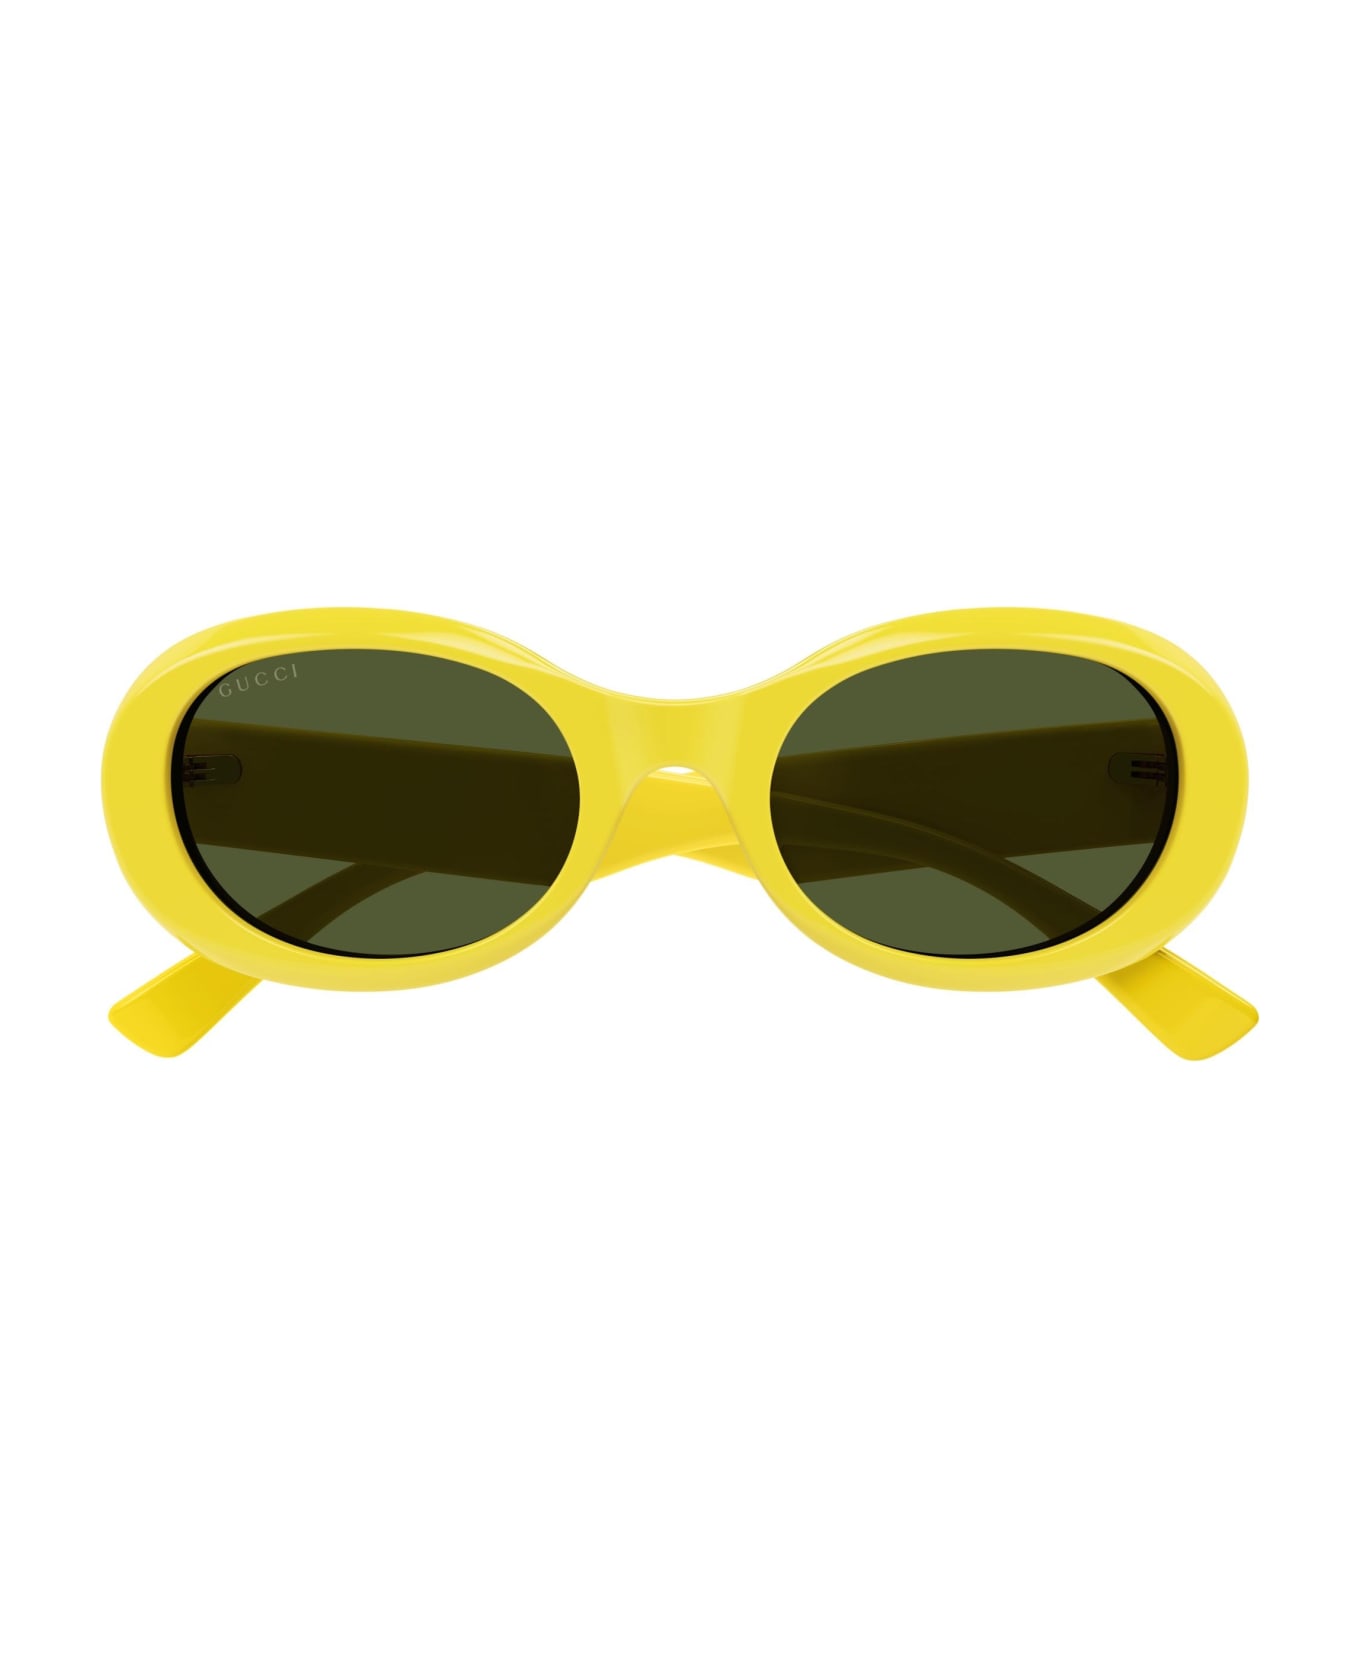 Gucci Eyewear Sunglasses - Giallo/Verde